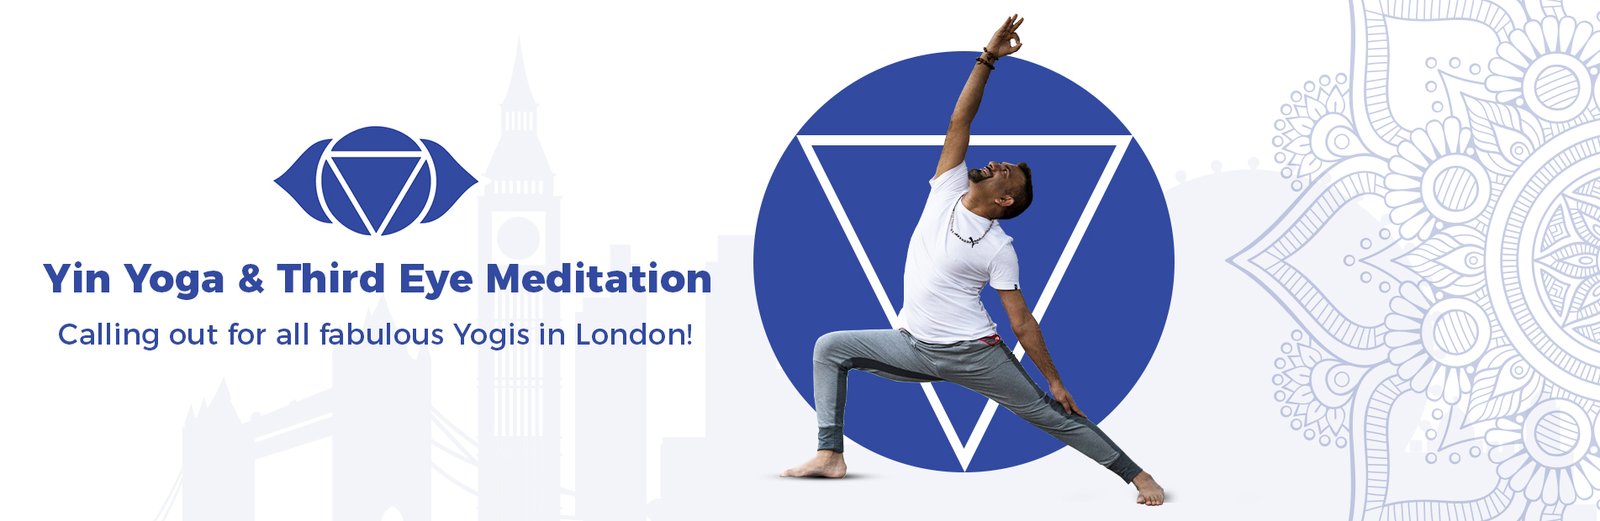 Yin Yoga & Third Eye Meditation